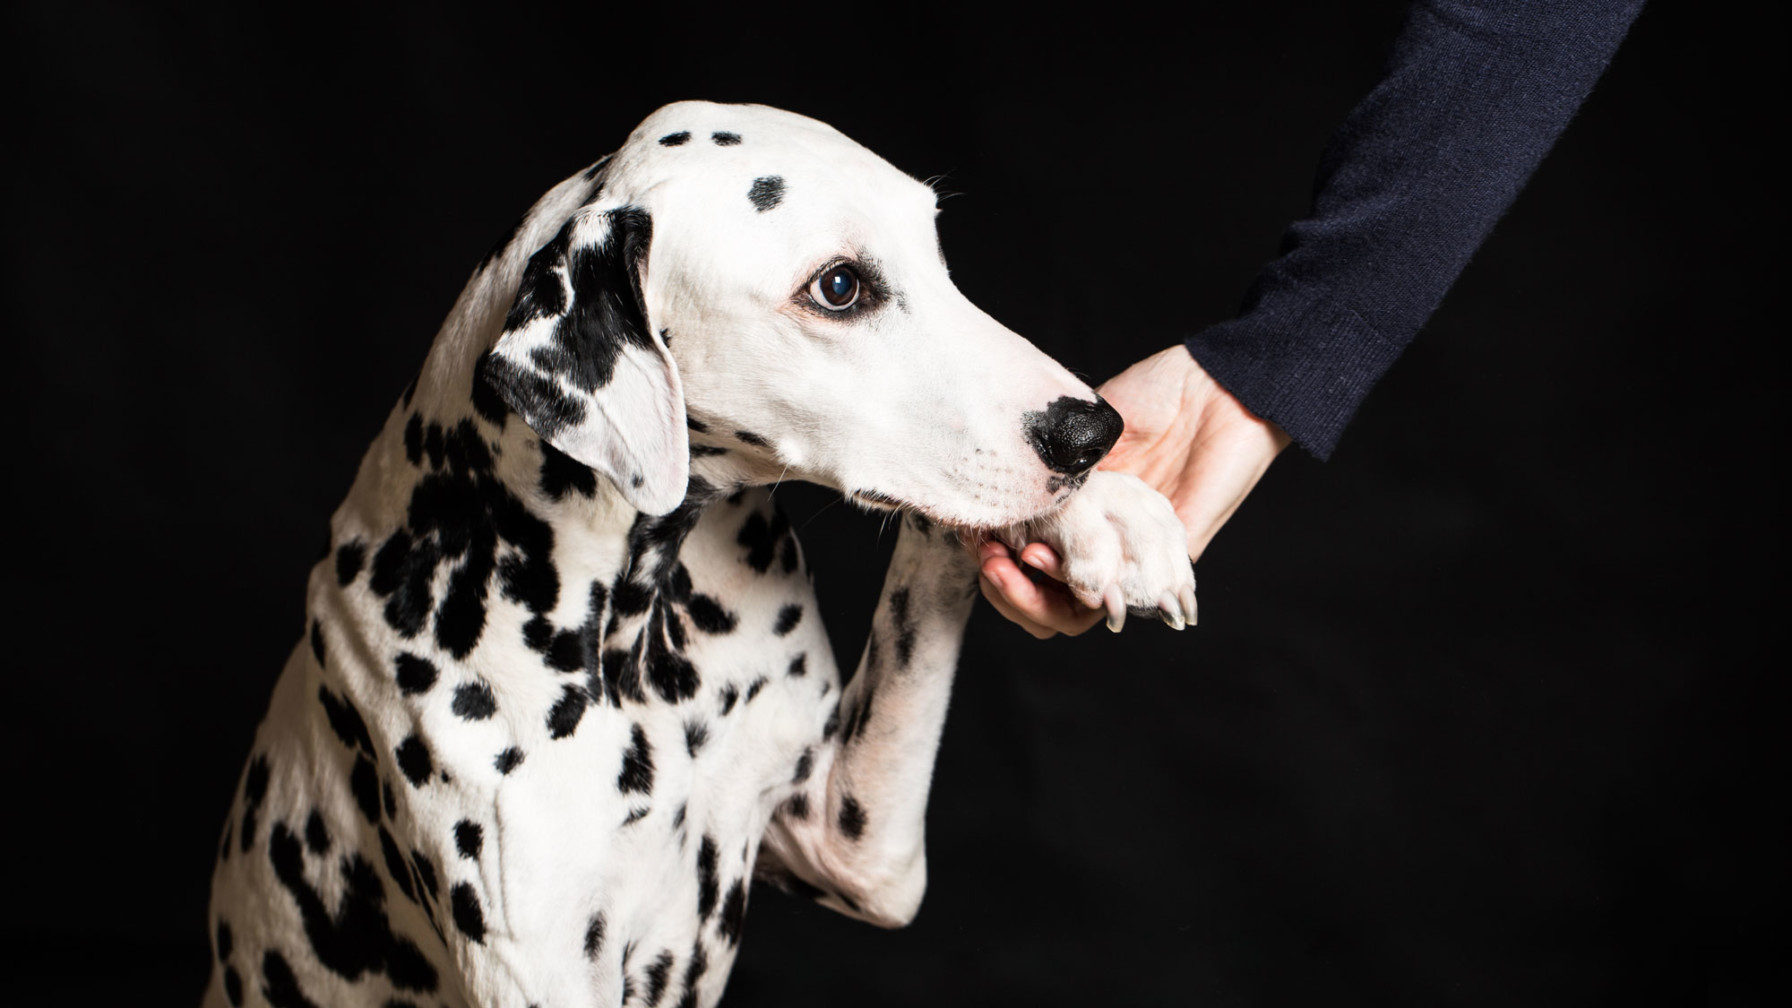 Showing compassion towards a Dalmatian